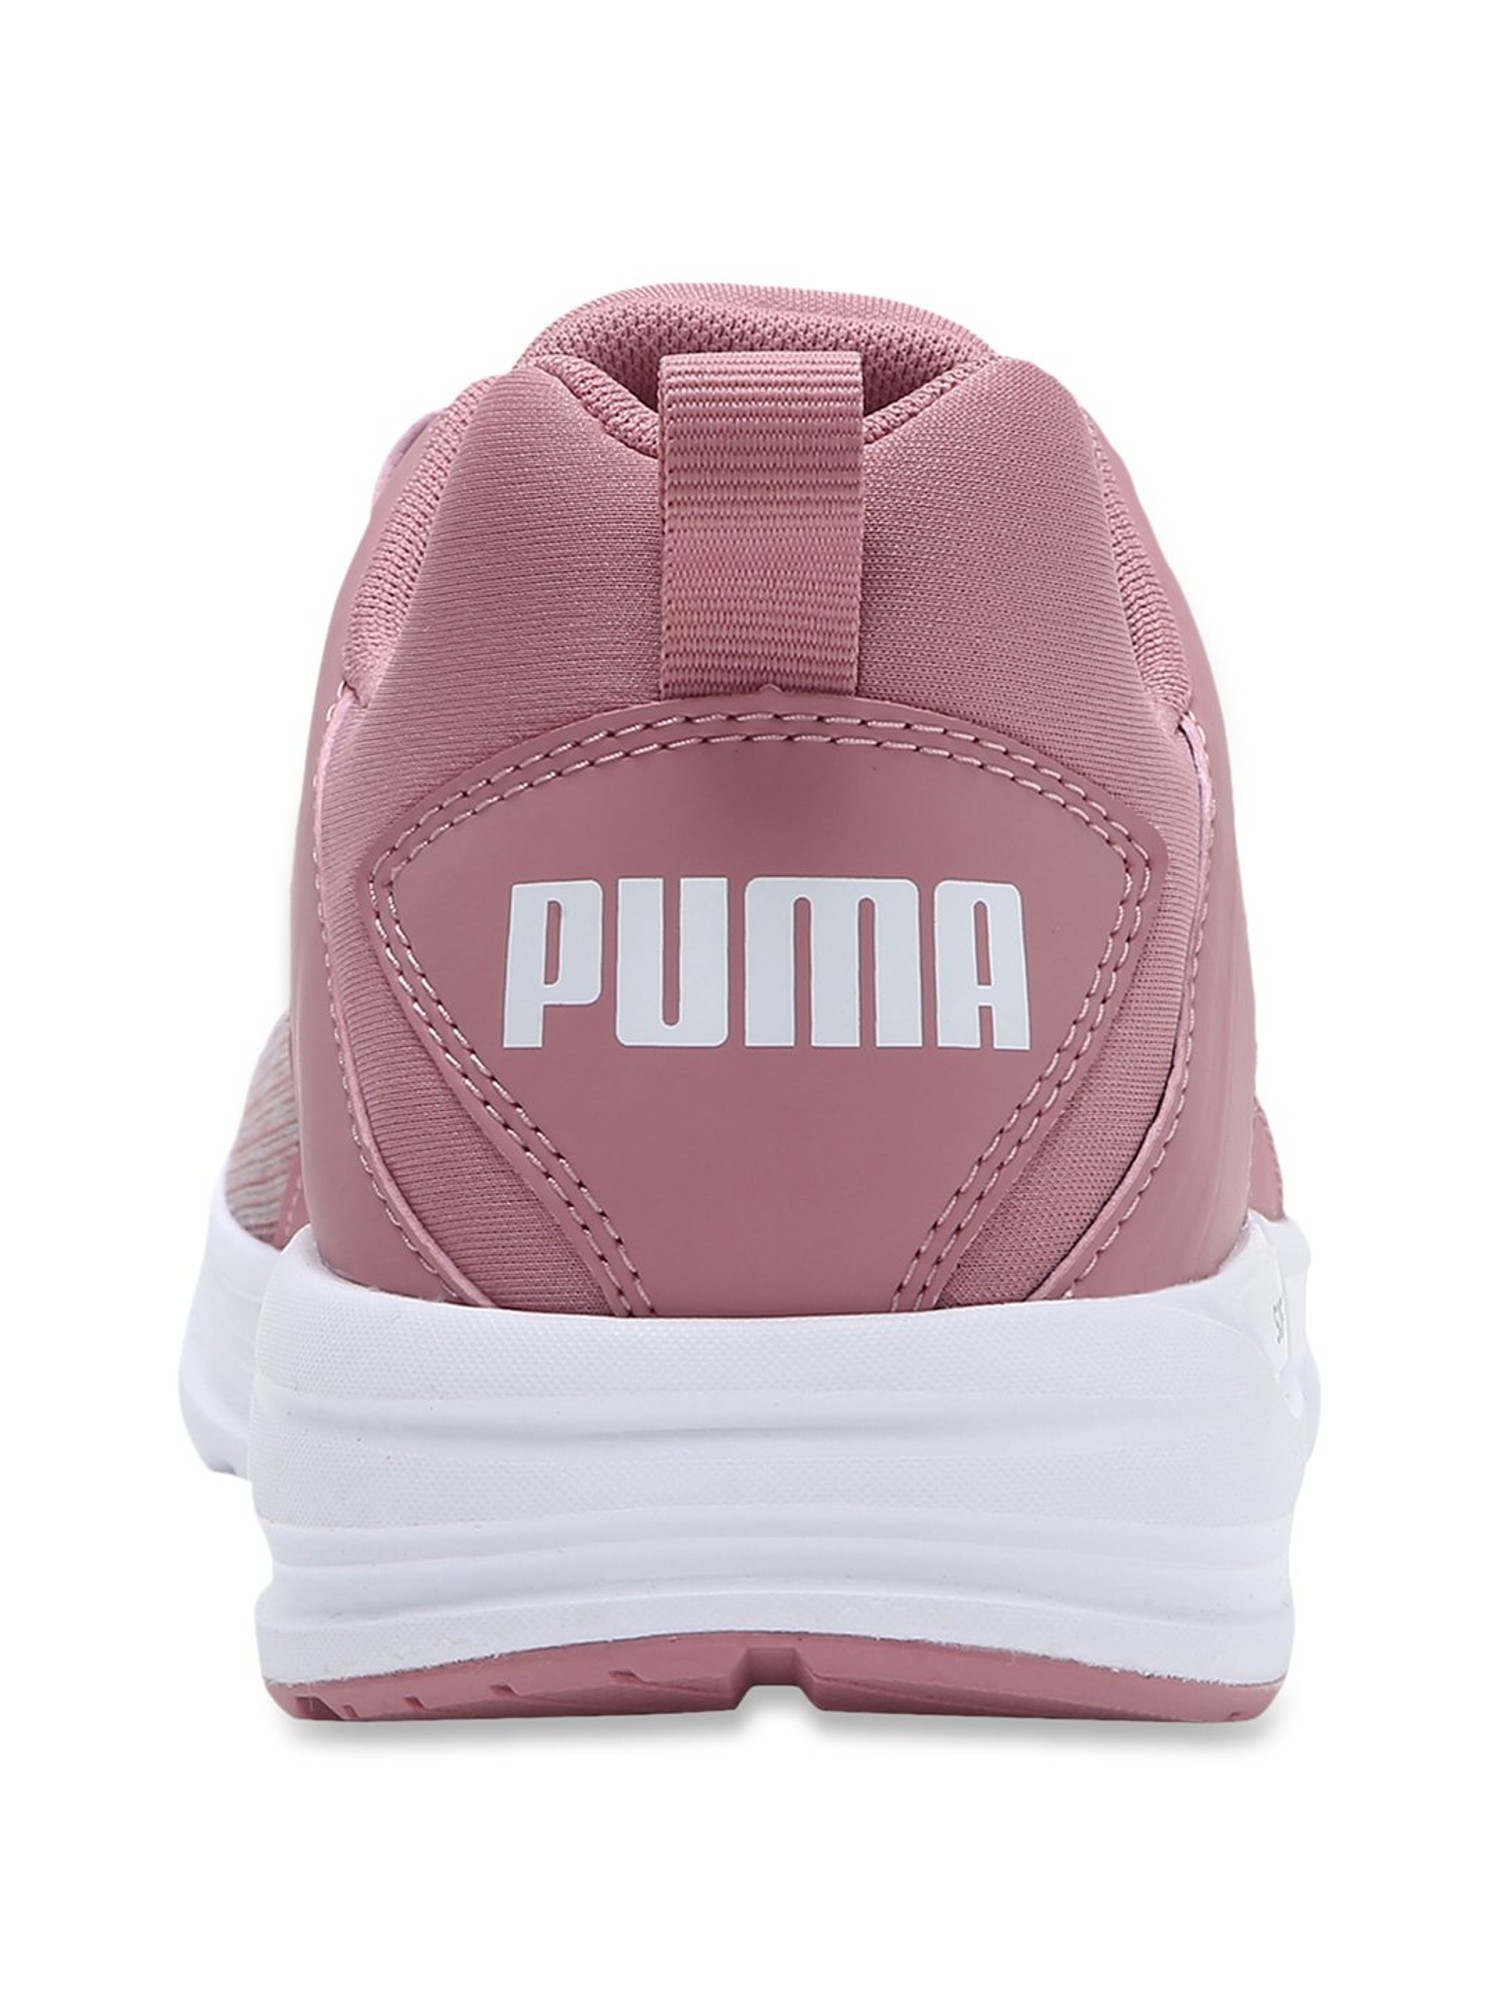 Pink Alt 2 Men CLiQ at Best for Price Buy Comet Running Puma @ Shoes Tata